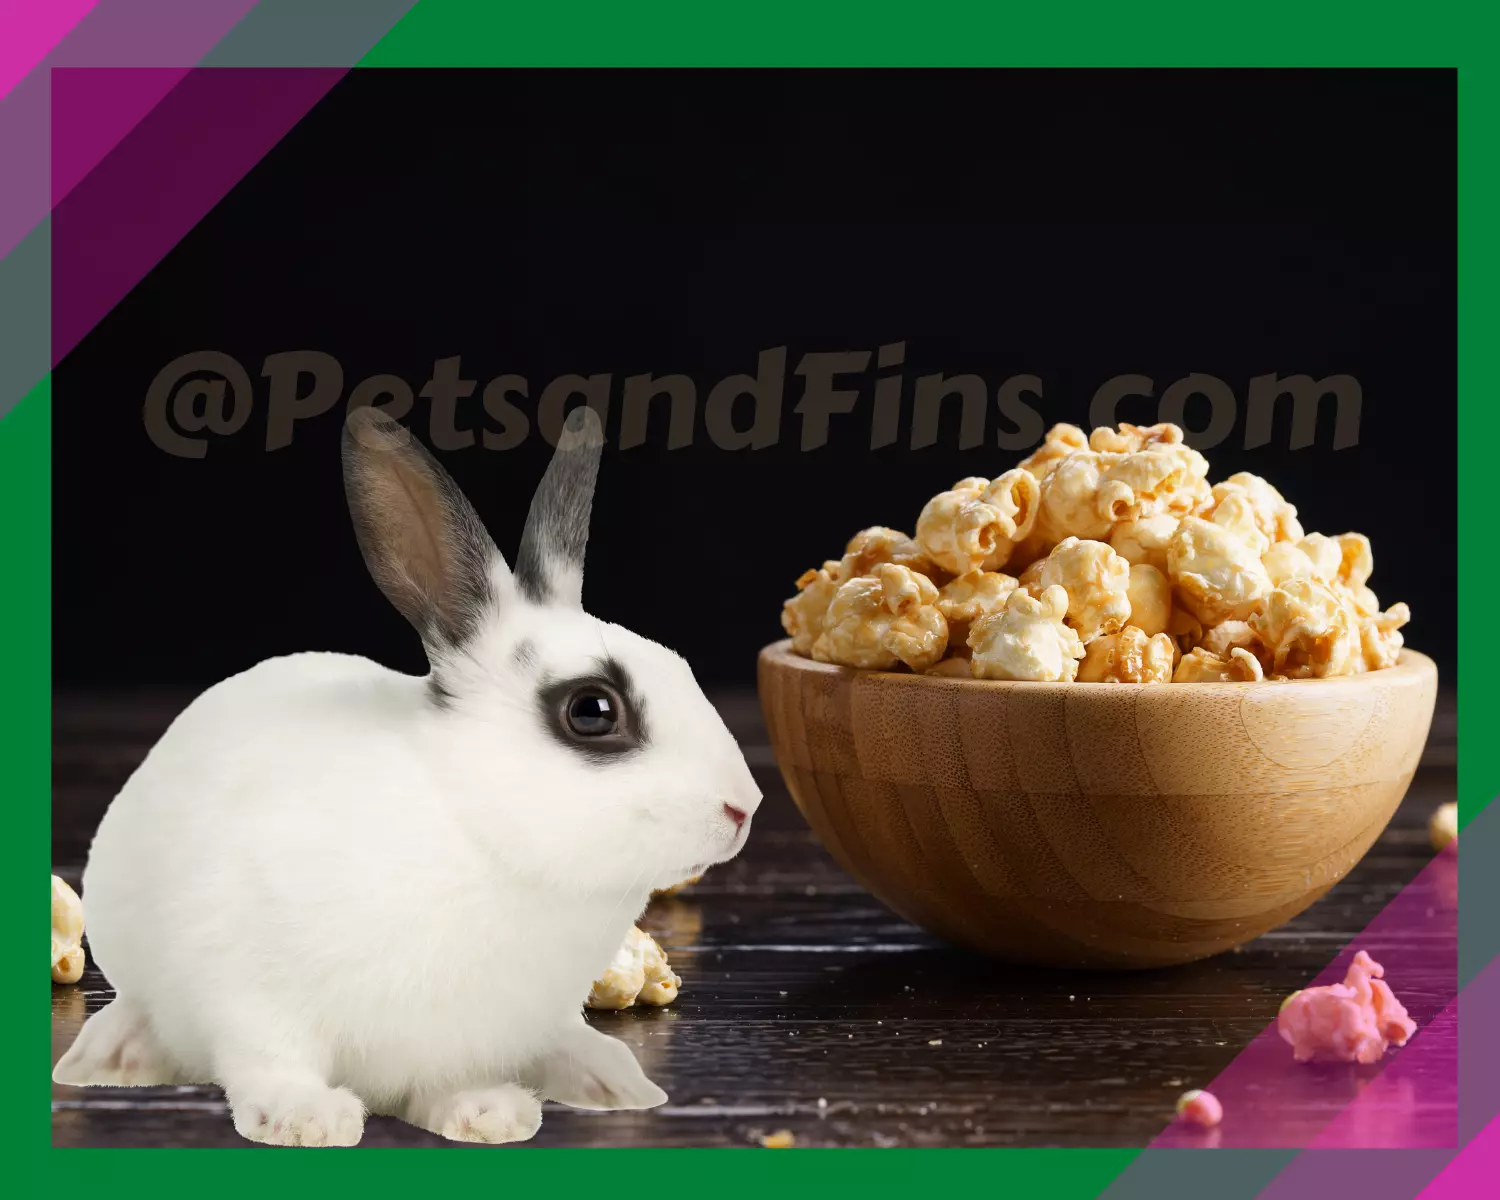 Rabbit and caramel popcorn